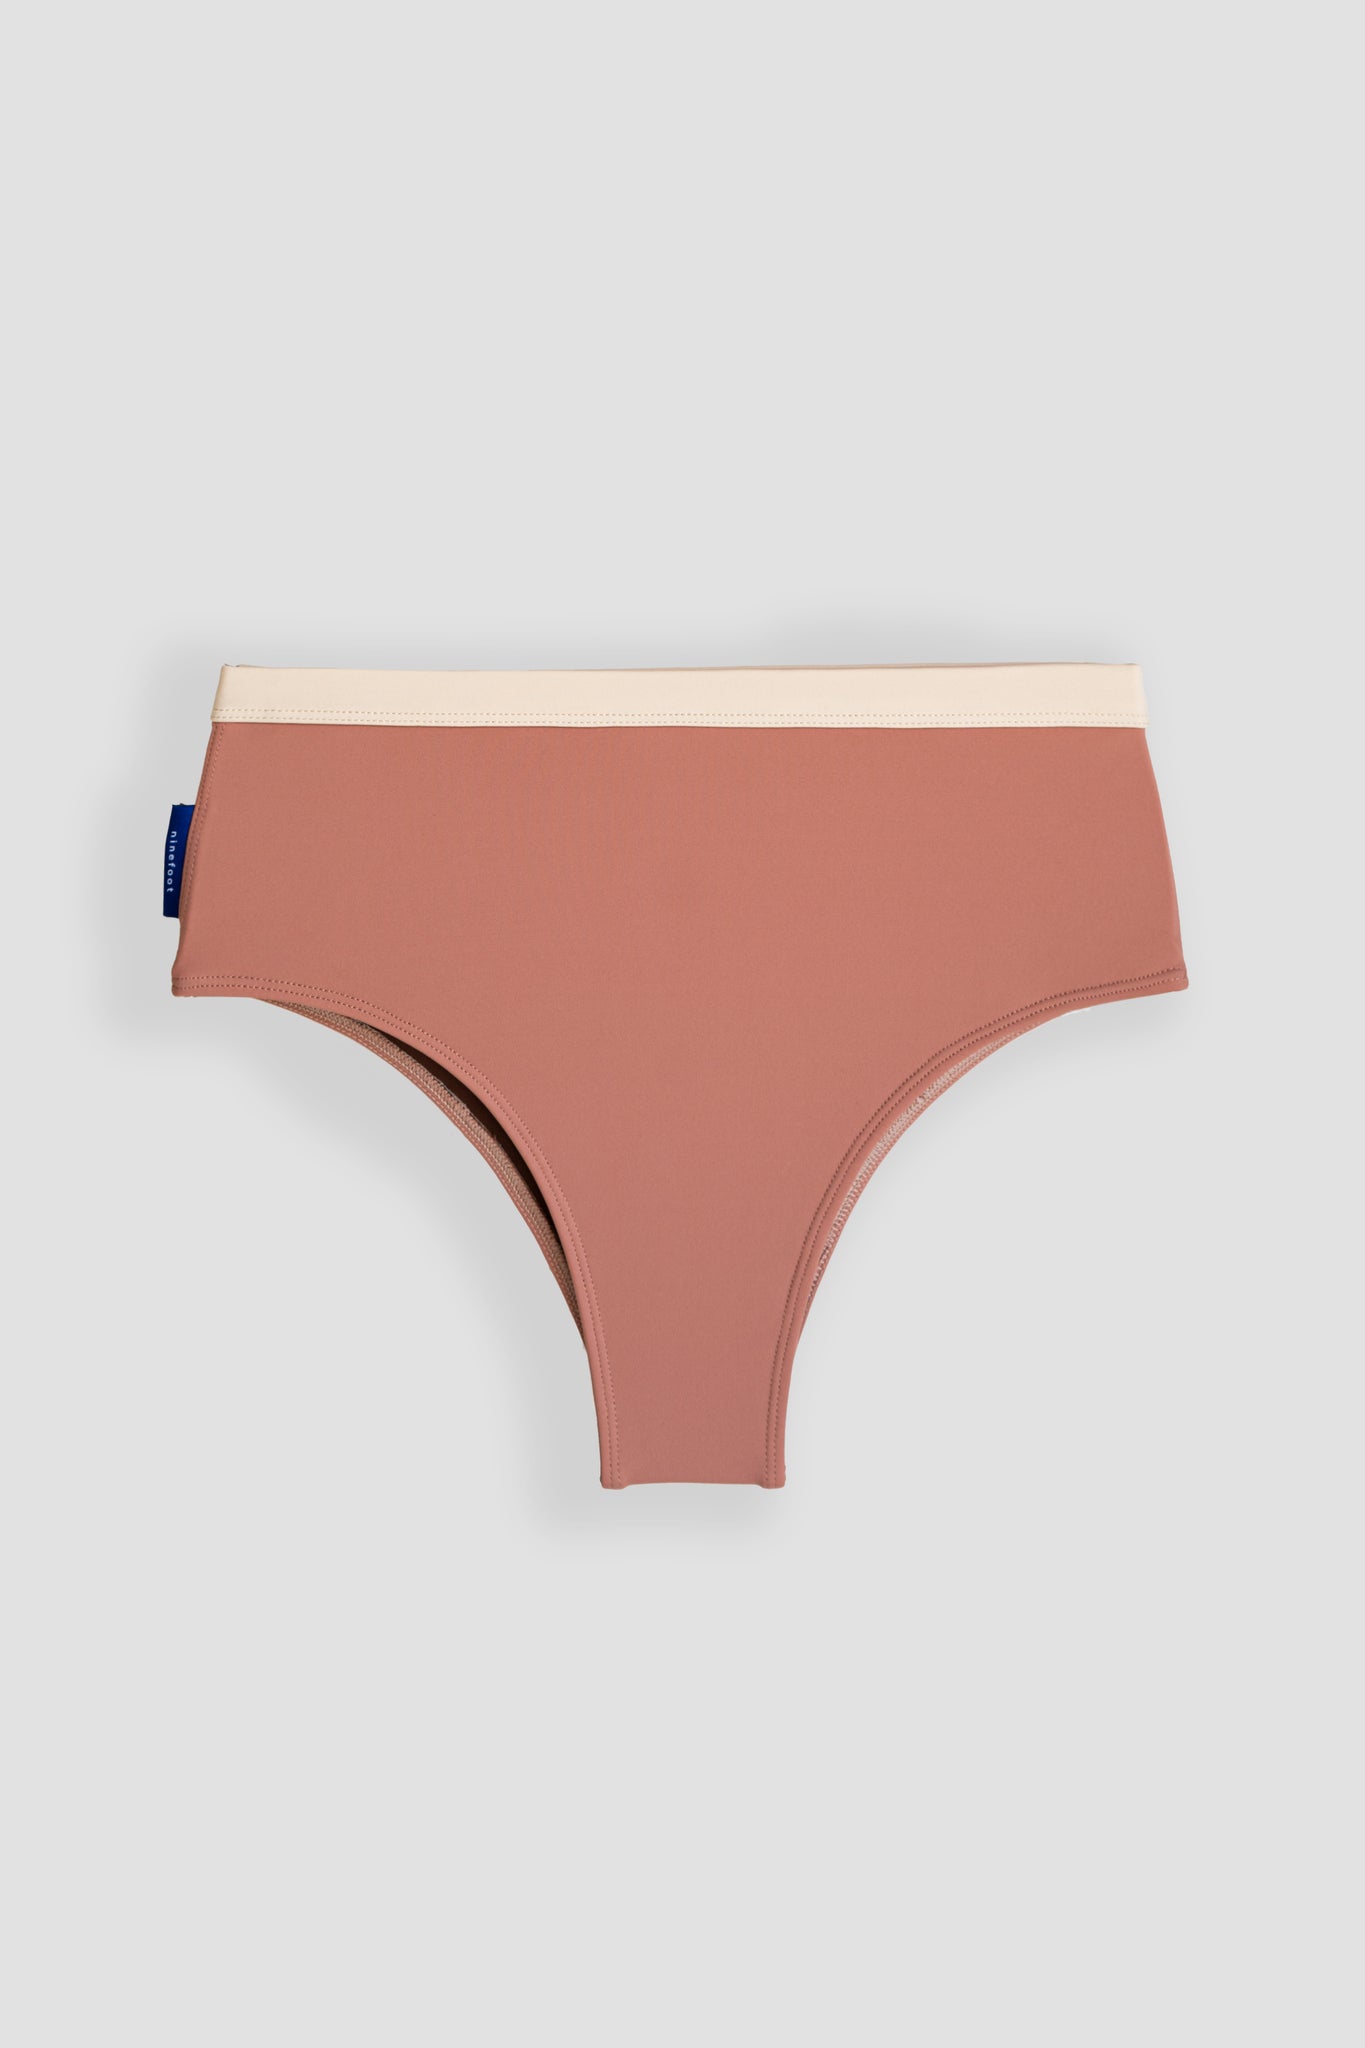 Ninefoot Studio Rote surf bikini bottom in pastel nude | Bottom